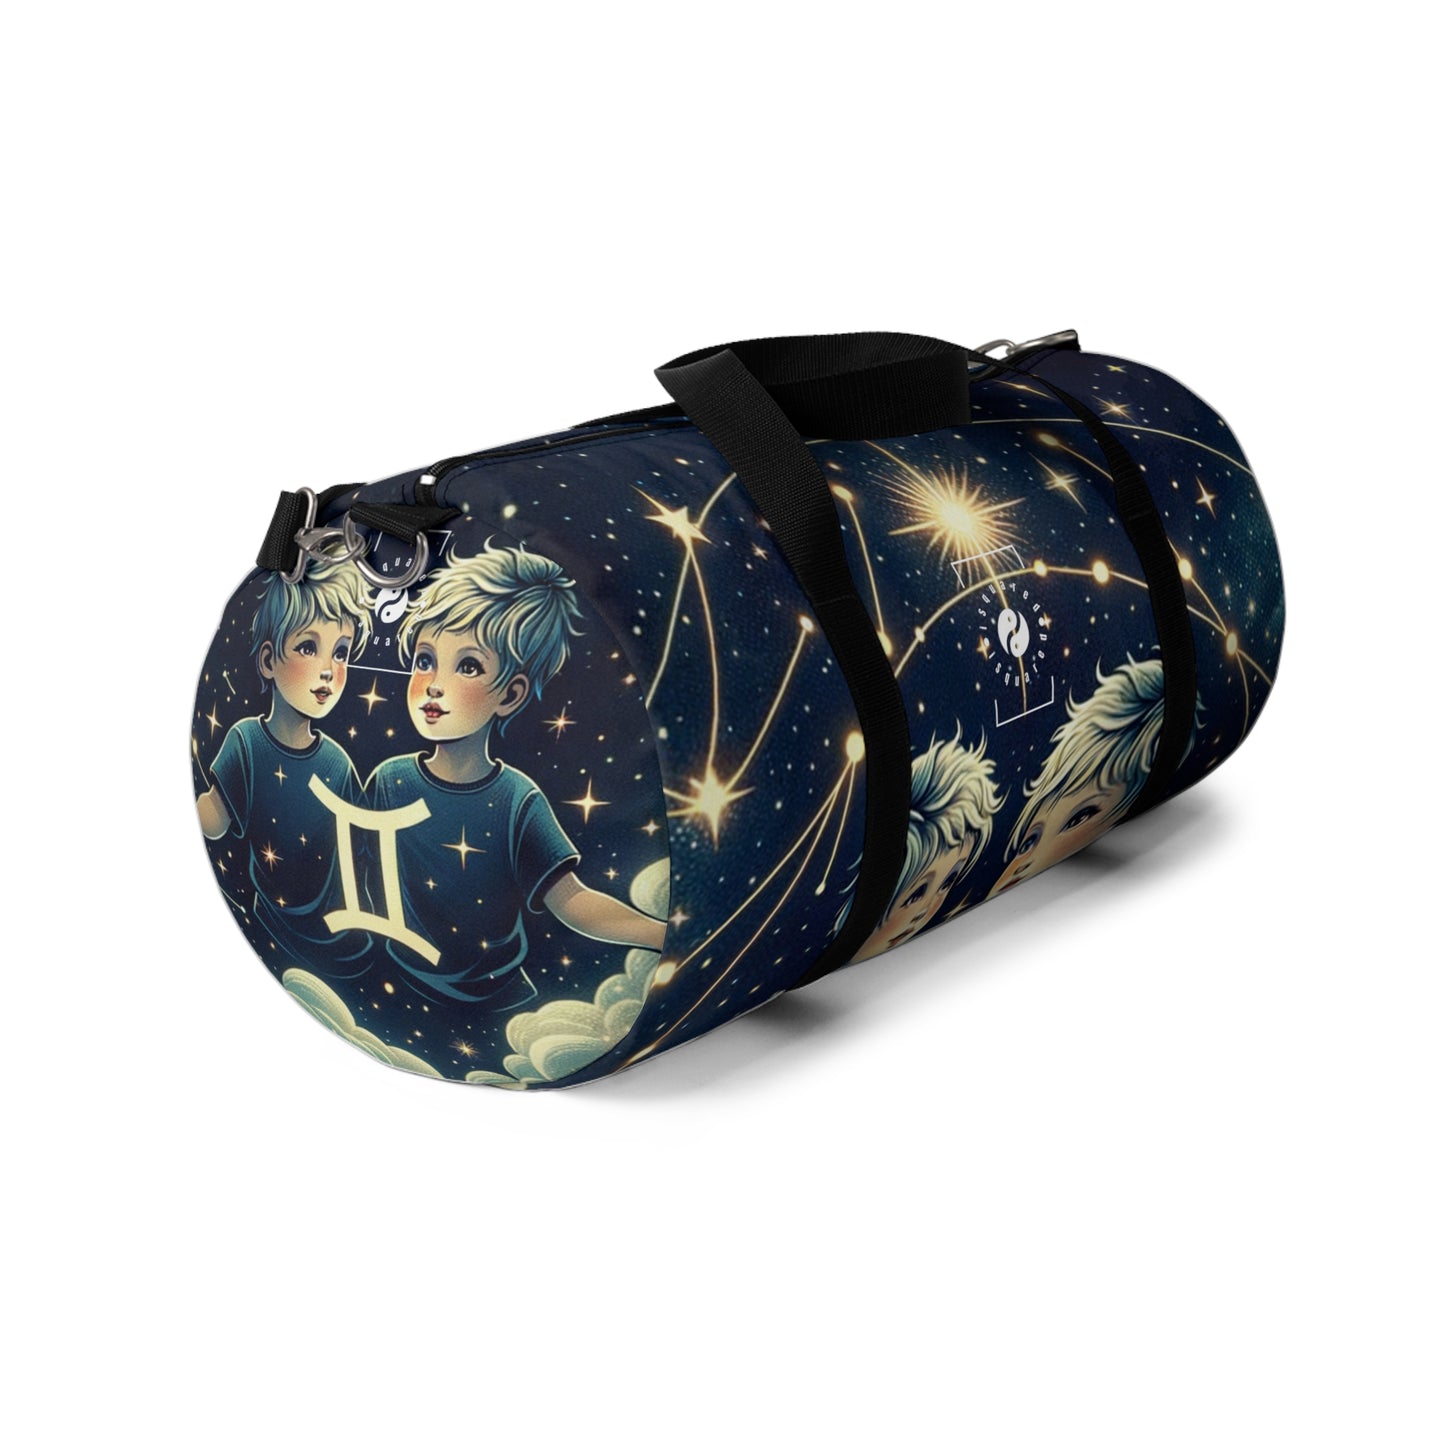 "Celestial Twinfinity" - Duffle Bag